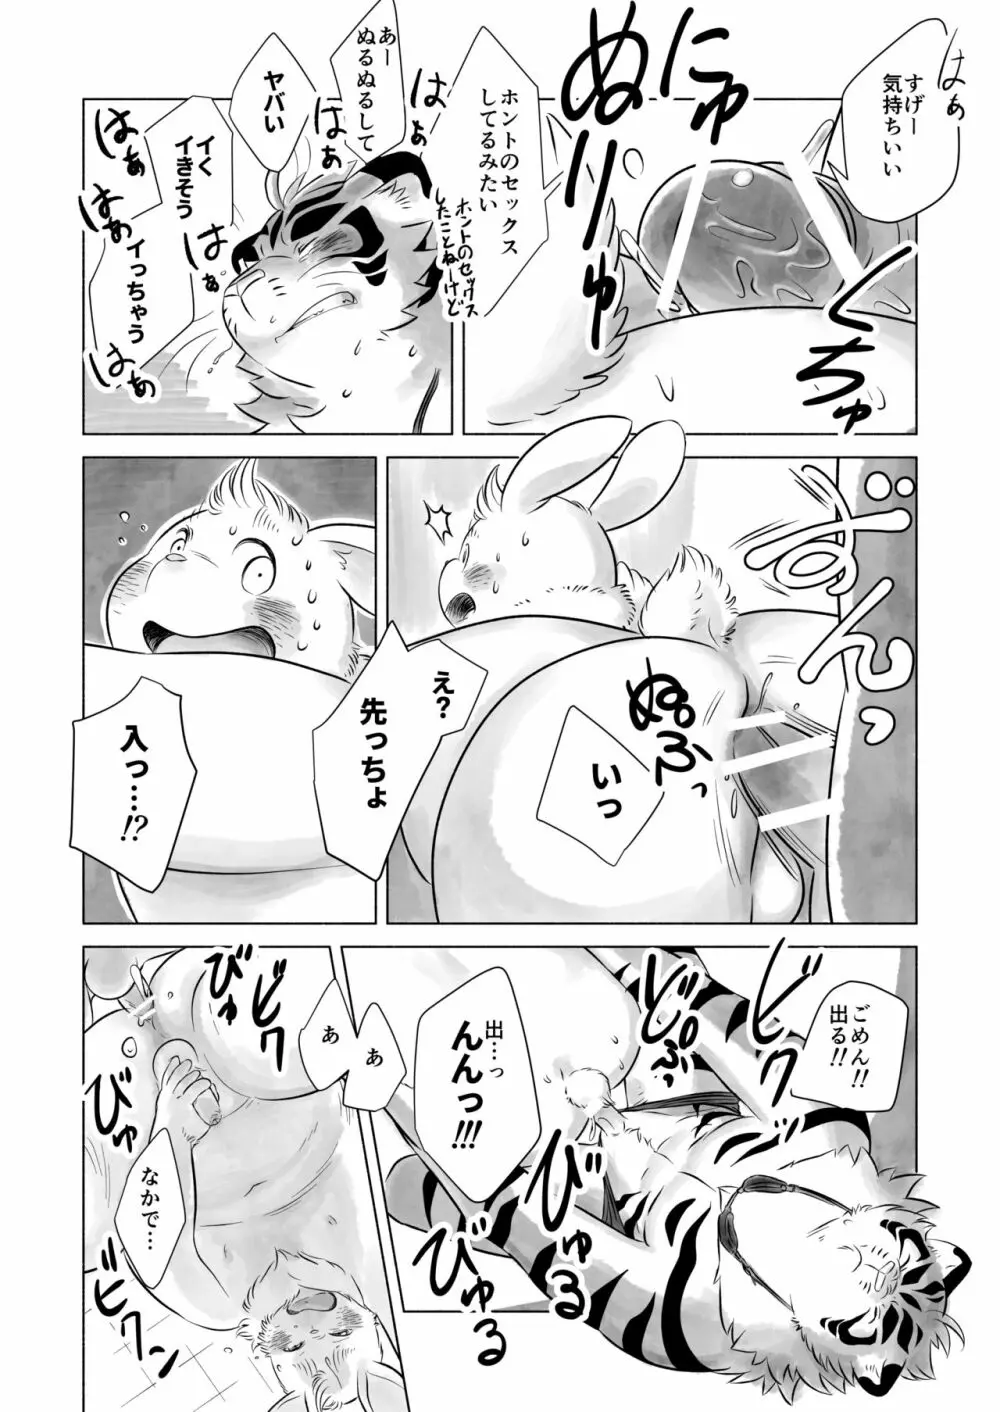 Koda_kota – Bunny and Tiger + extras 8ページ